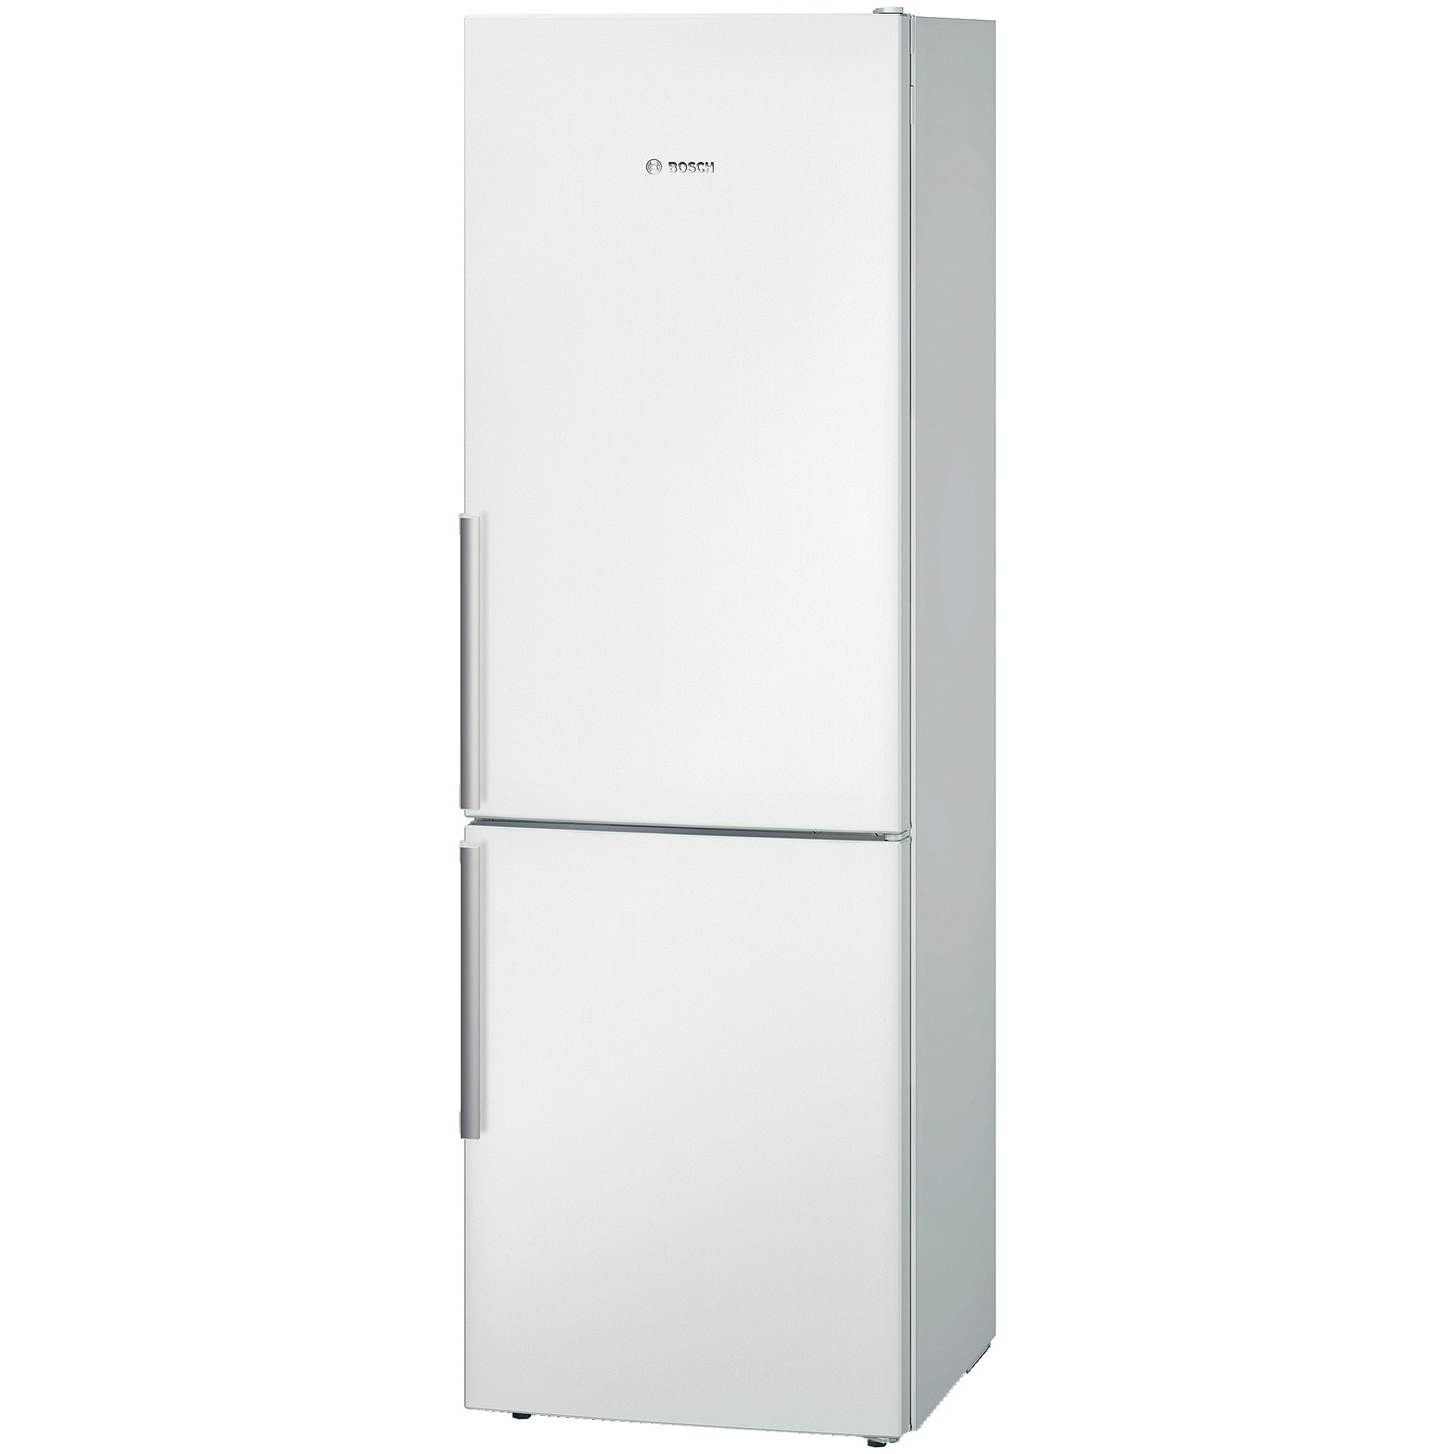  Combina frigorifica Bosch KGE36AW42, 304 l, Clasa A+++, Alb 